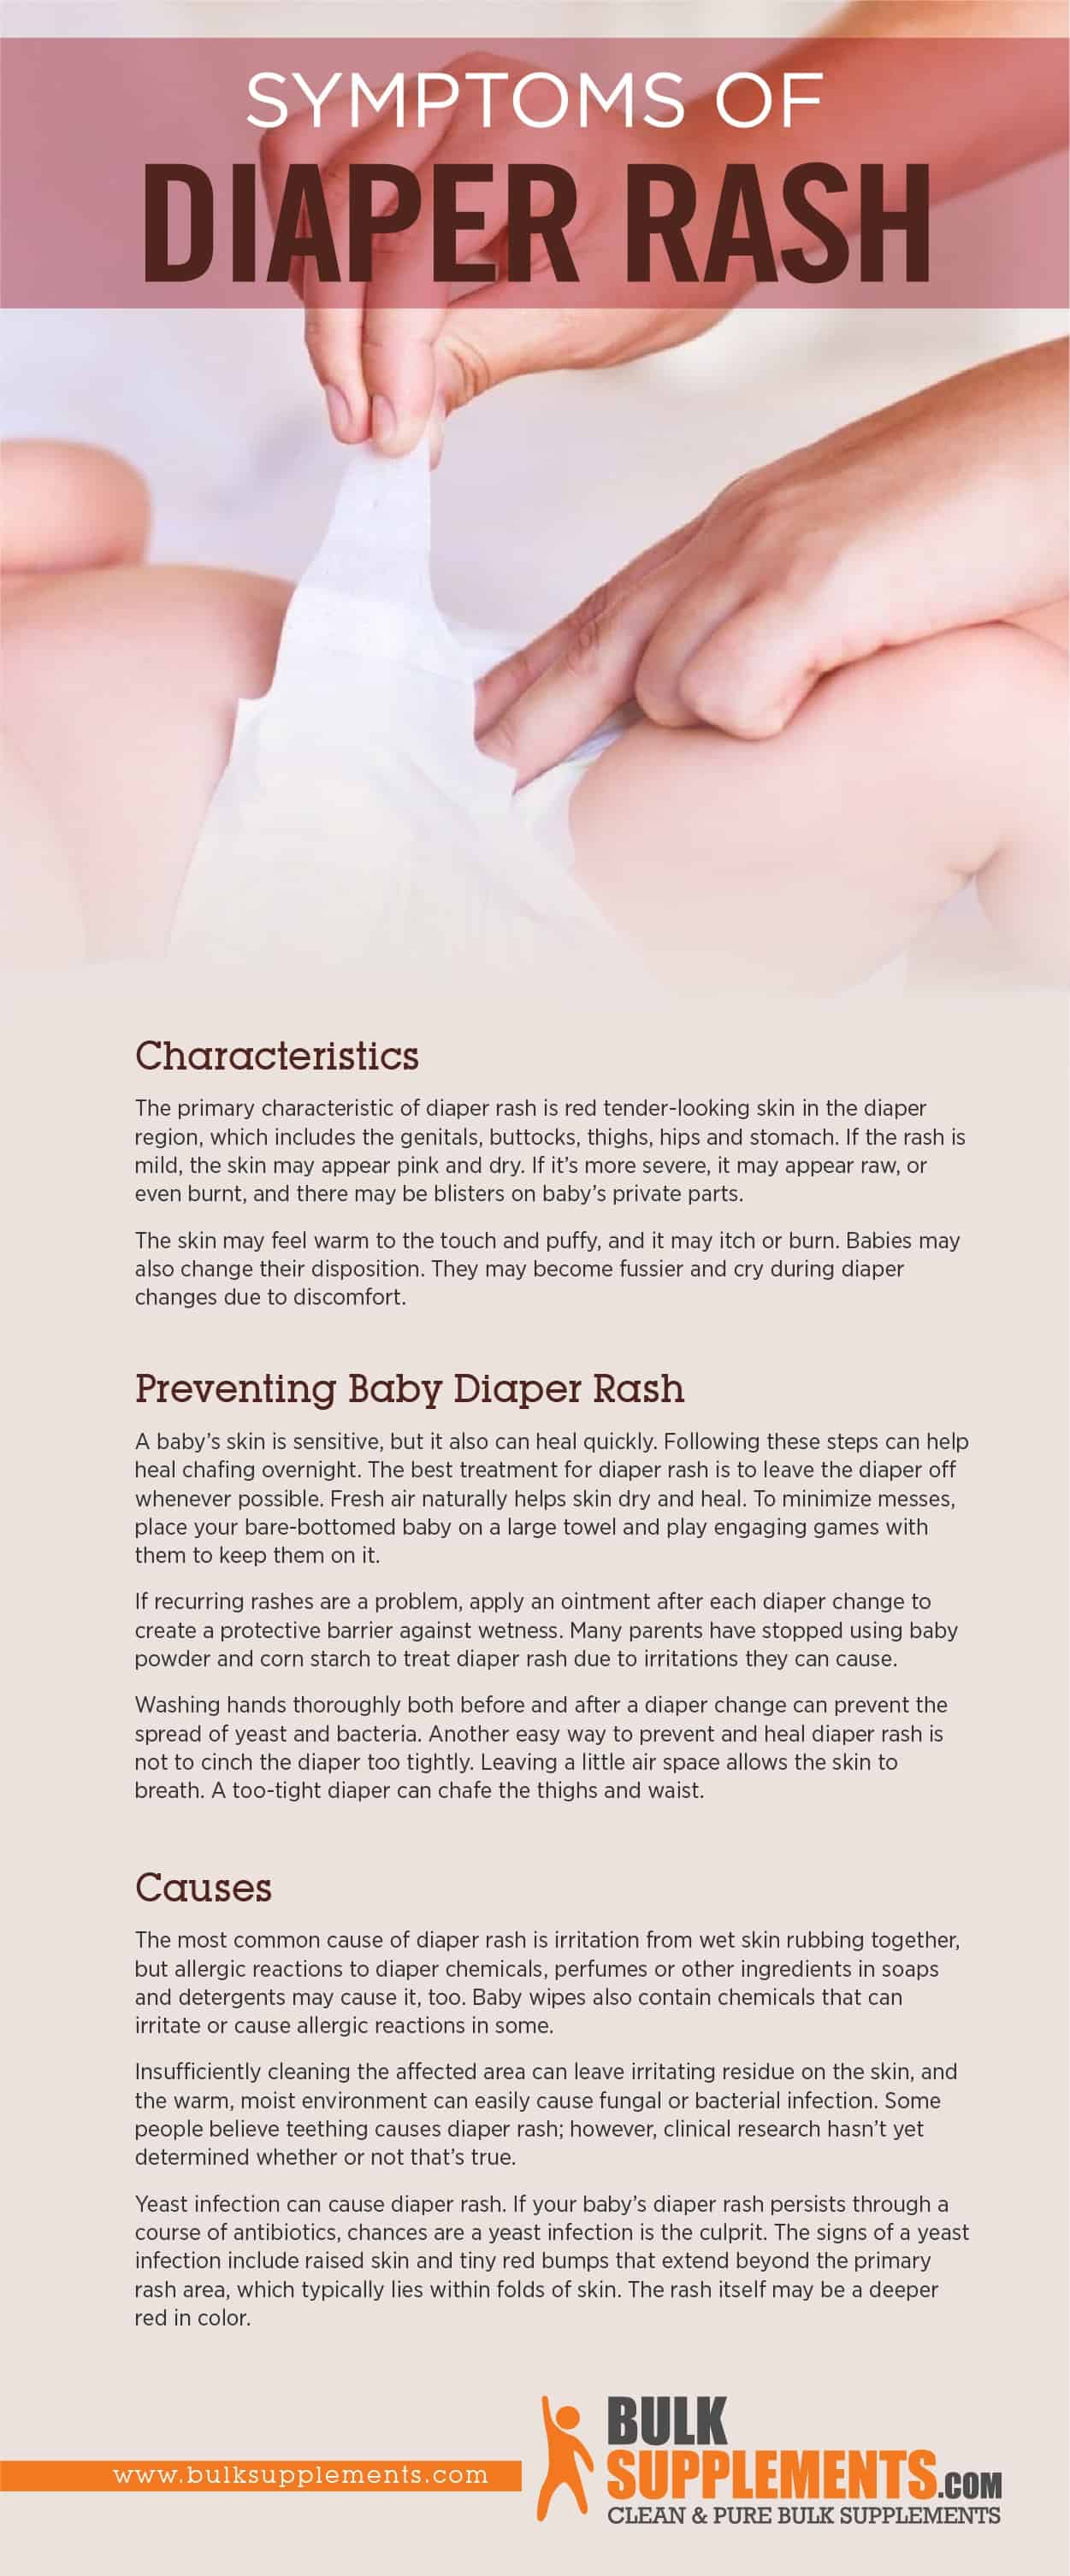 Diaper Rash Symptoms